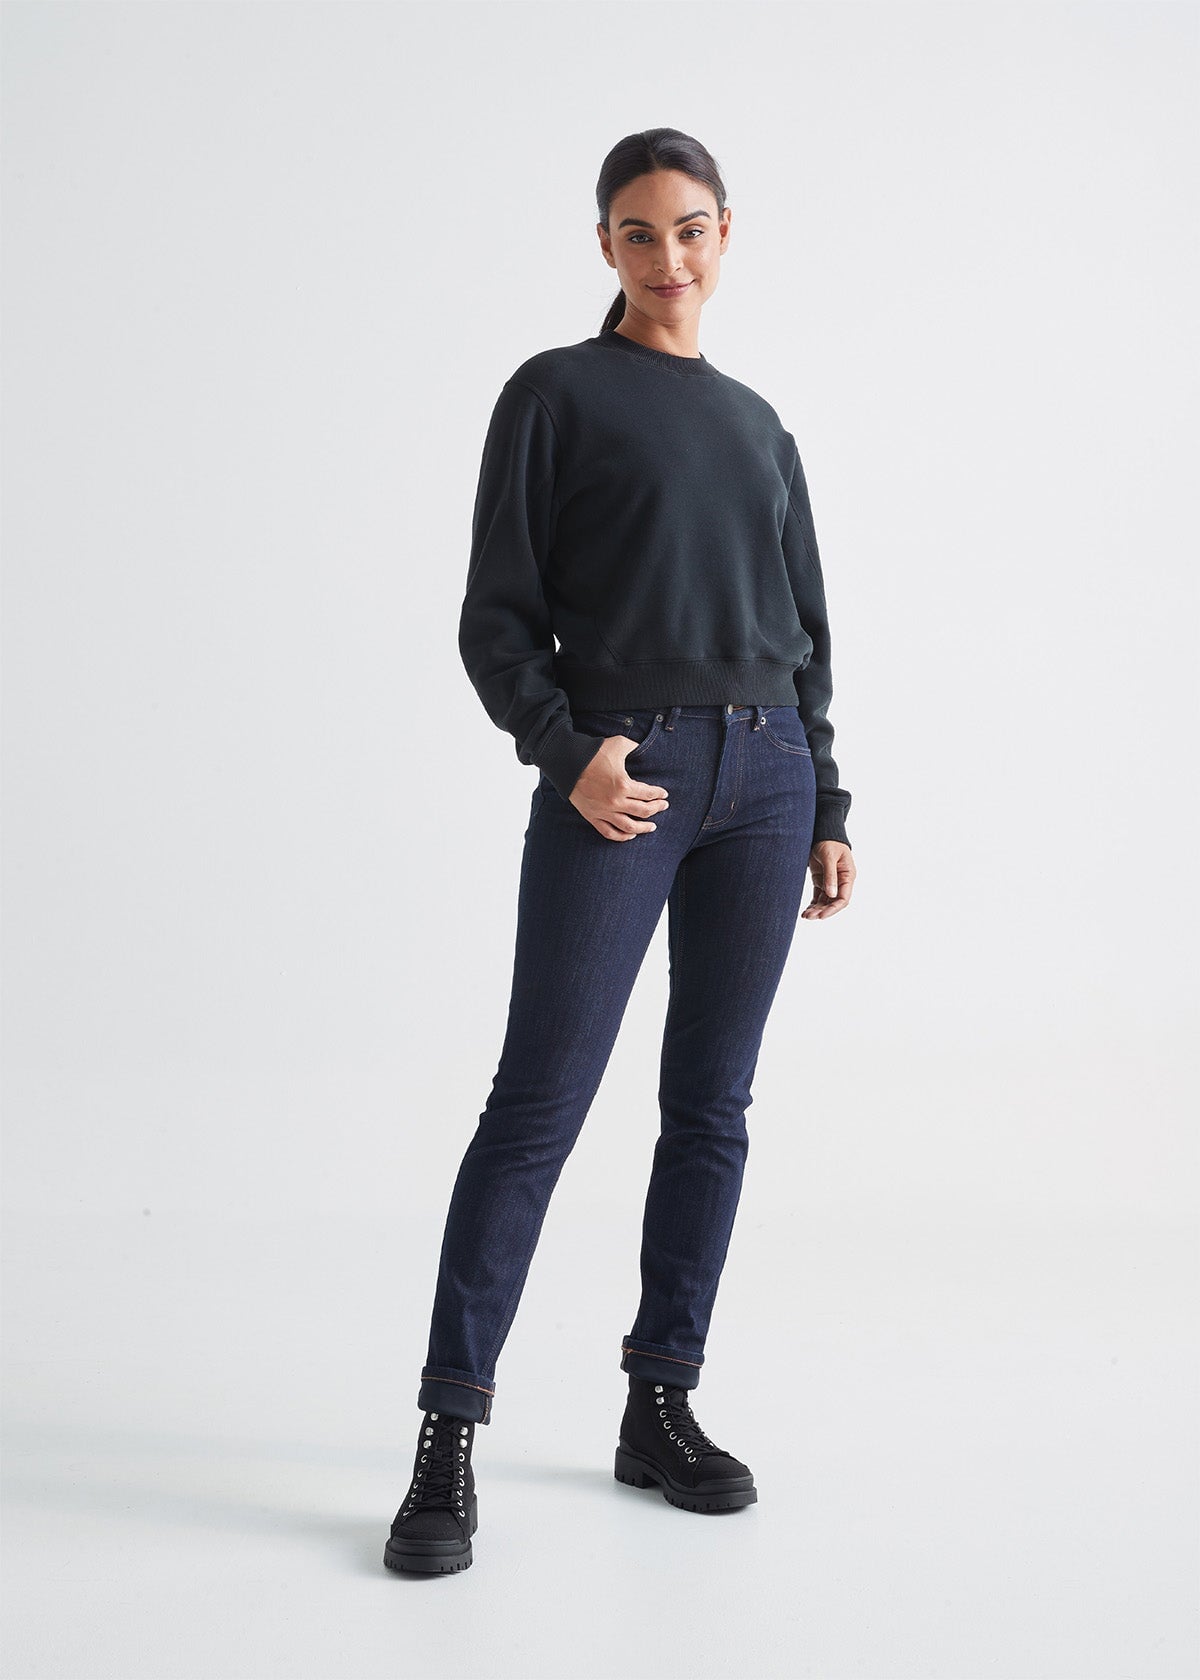 Women's Straight Jeans, Black/Dark grey